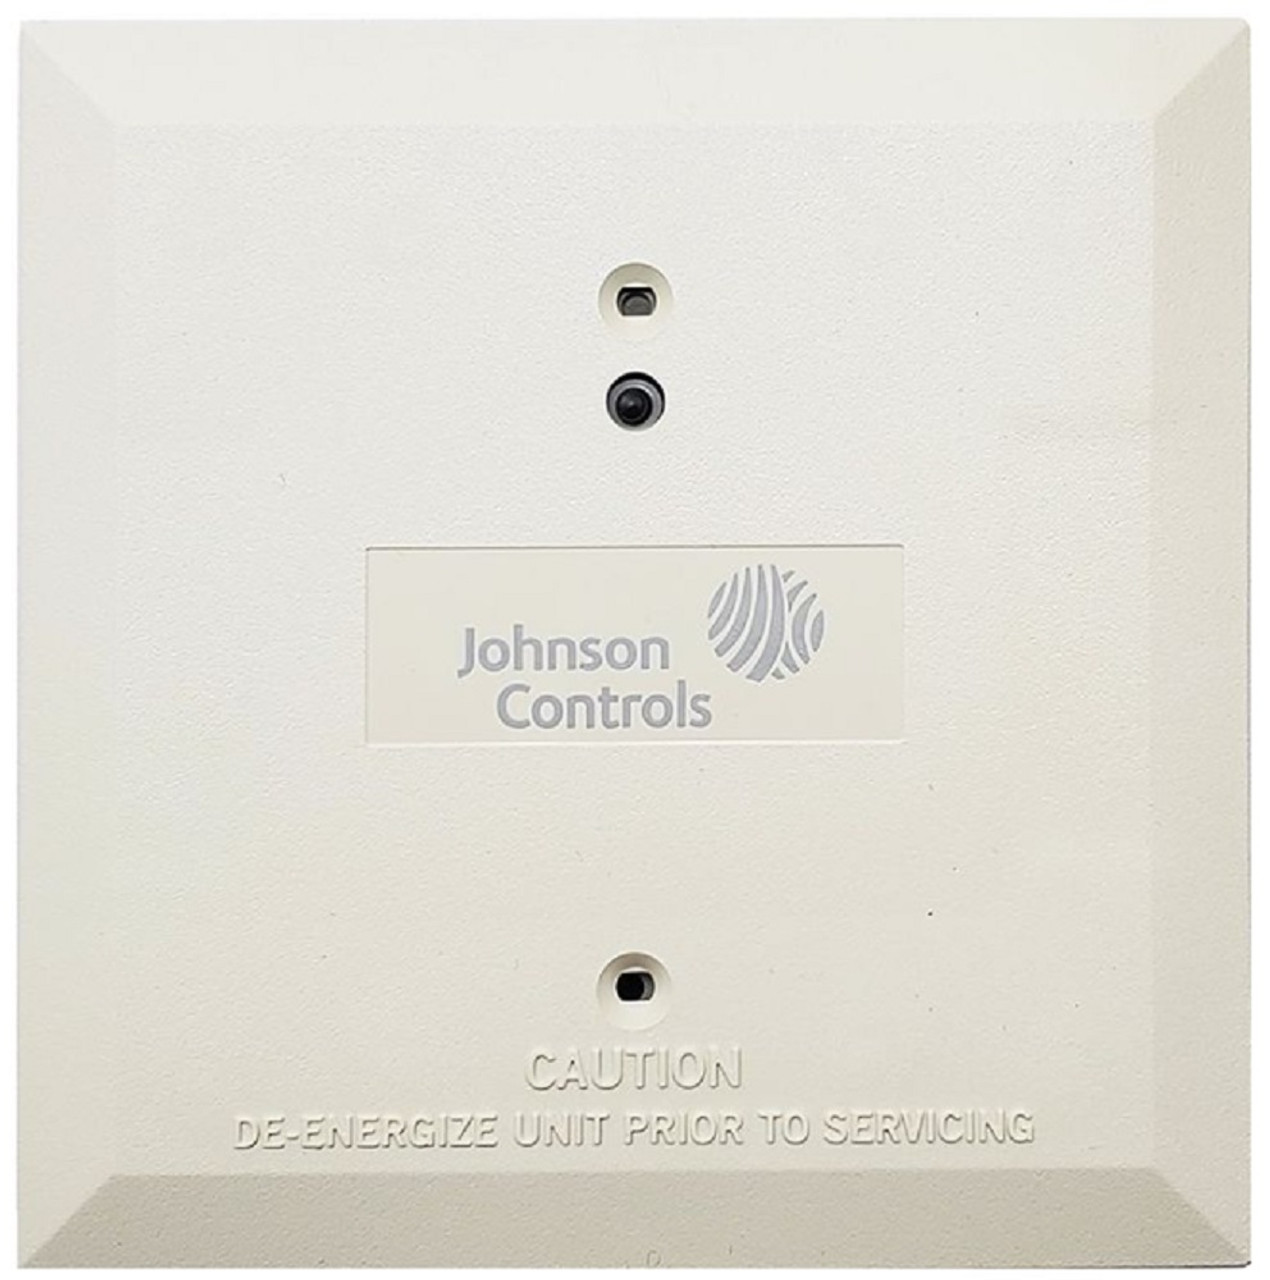 Johnson Controls M300RJ Addressable Relay Module [New]